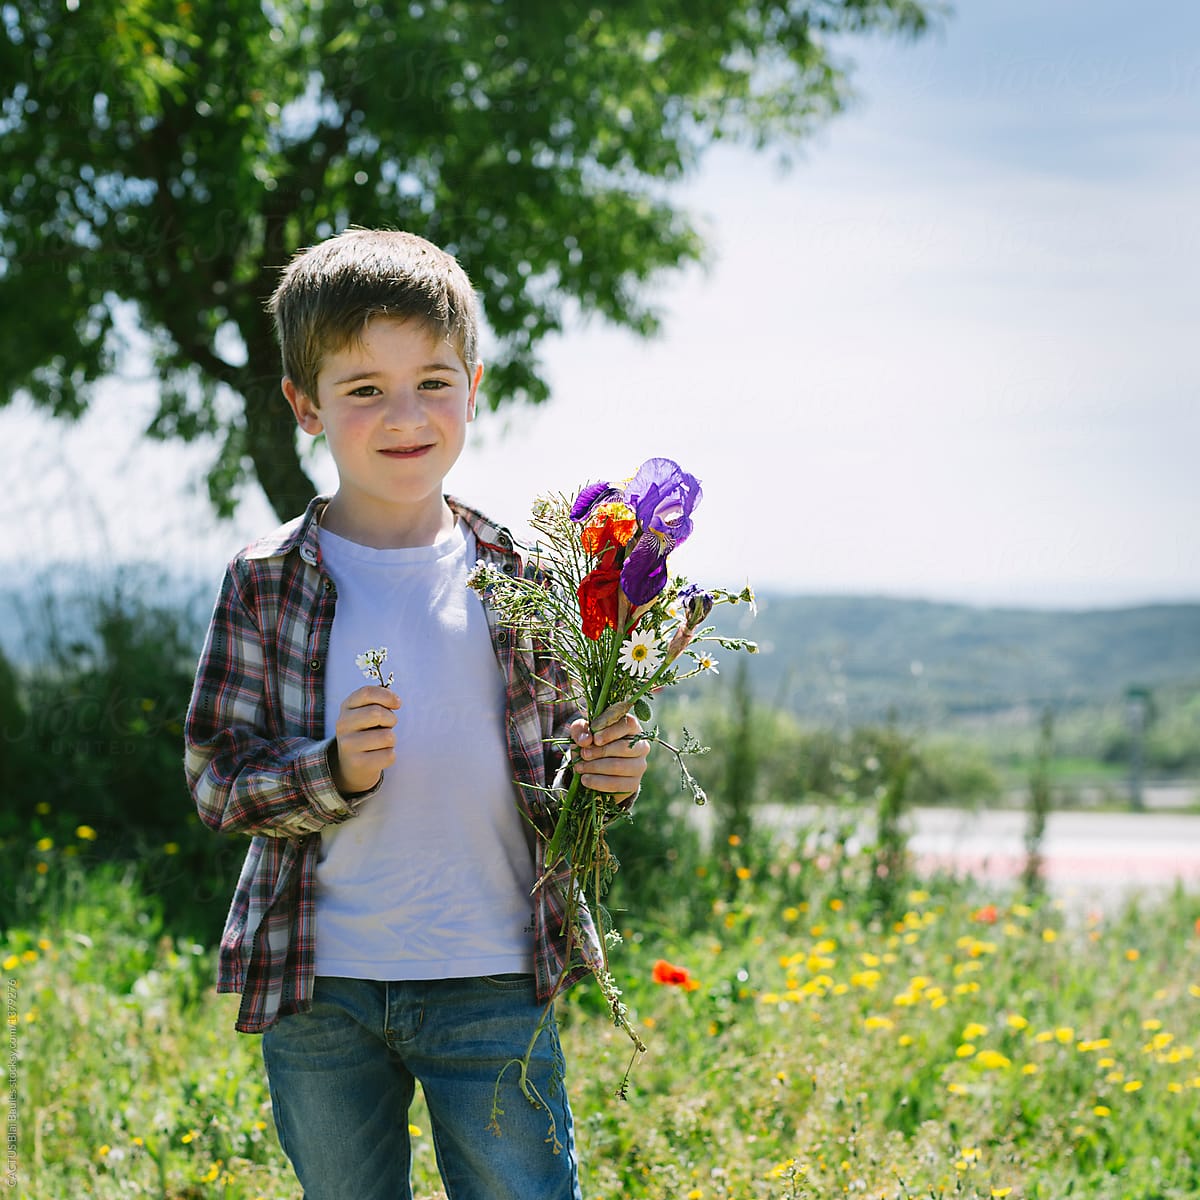 Kid picking flowers